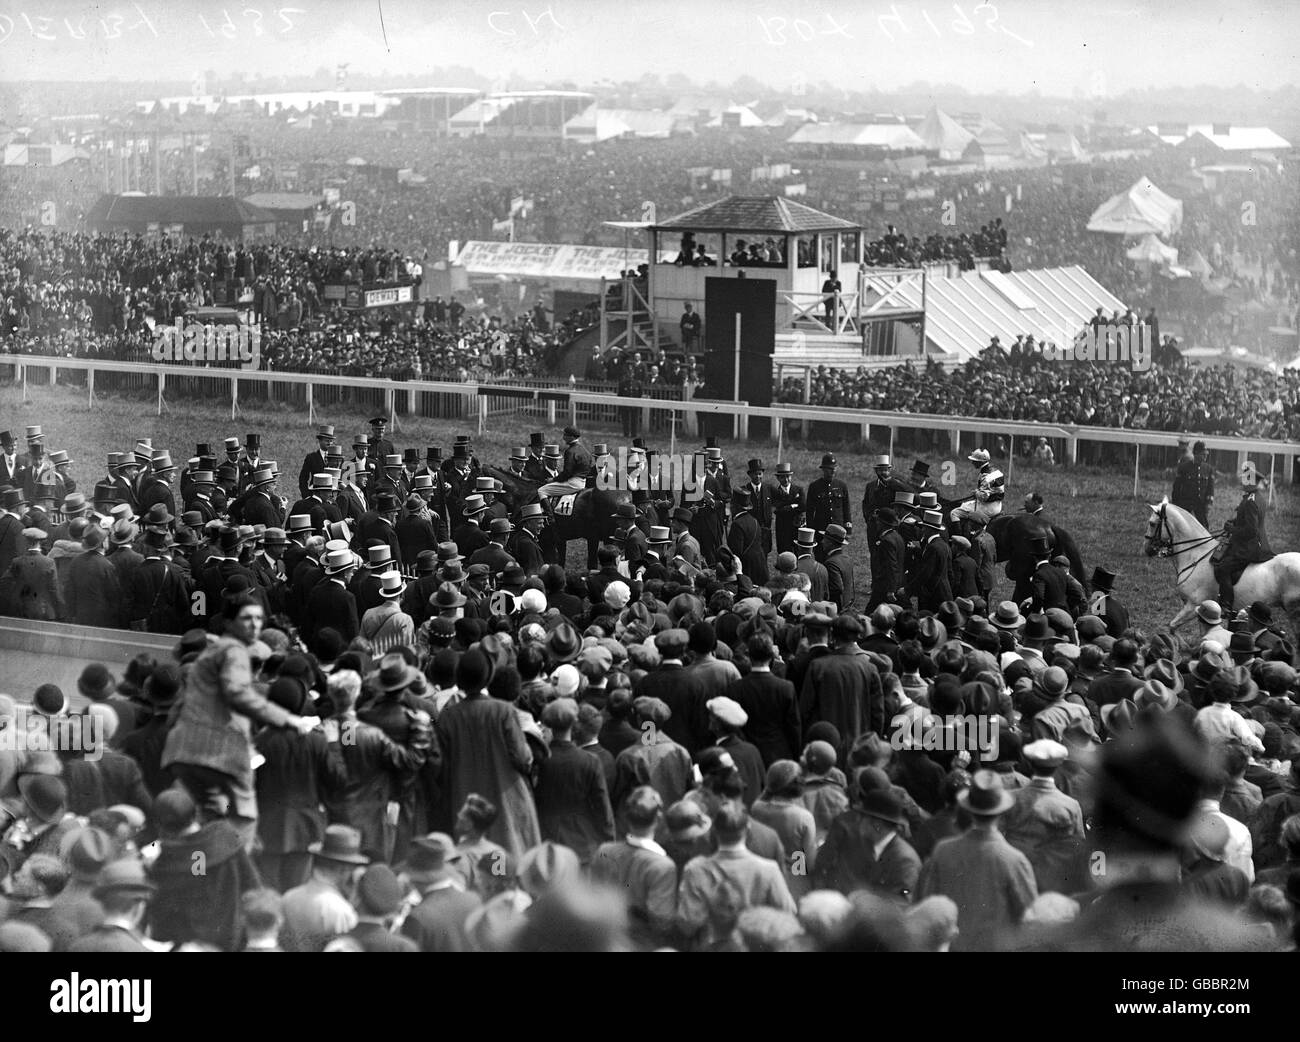 Pferderennen - The Derby Stakes - Epsom - 1932. Szene im Derby bei Epsom  Downs Stockfotografie - Alamy